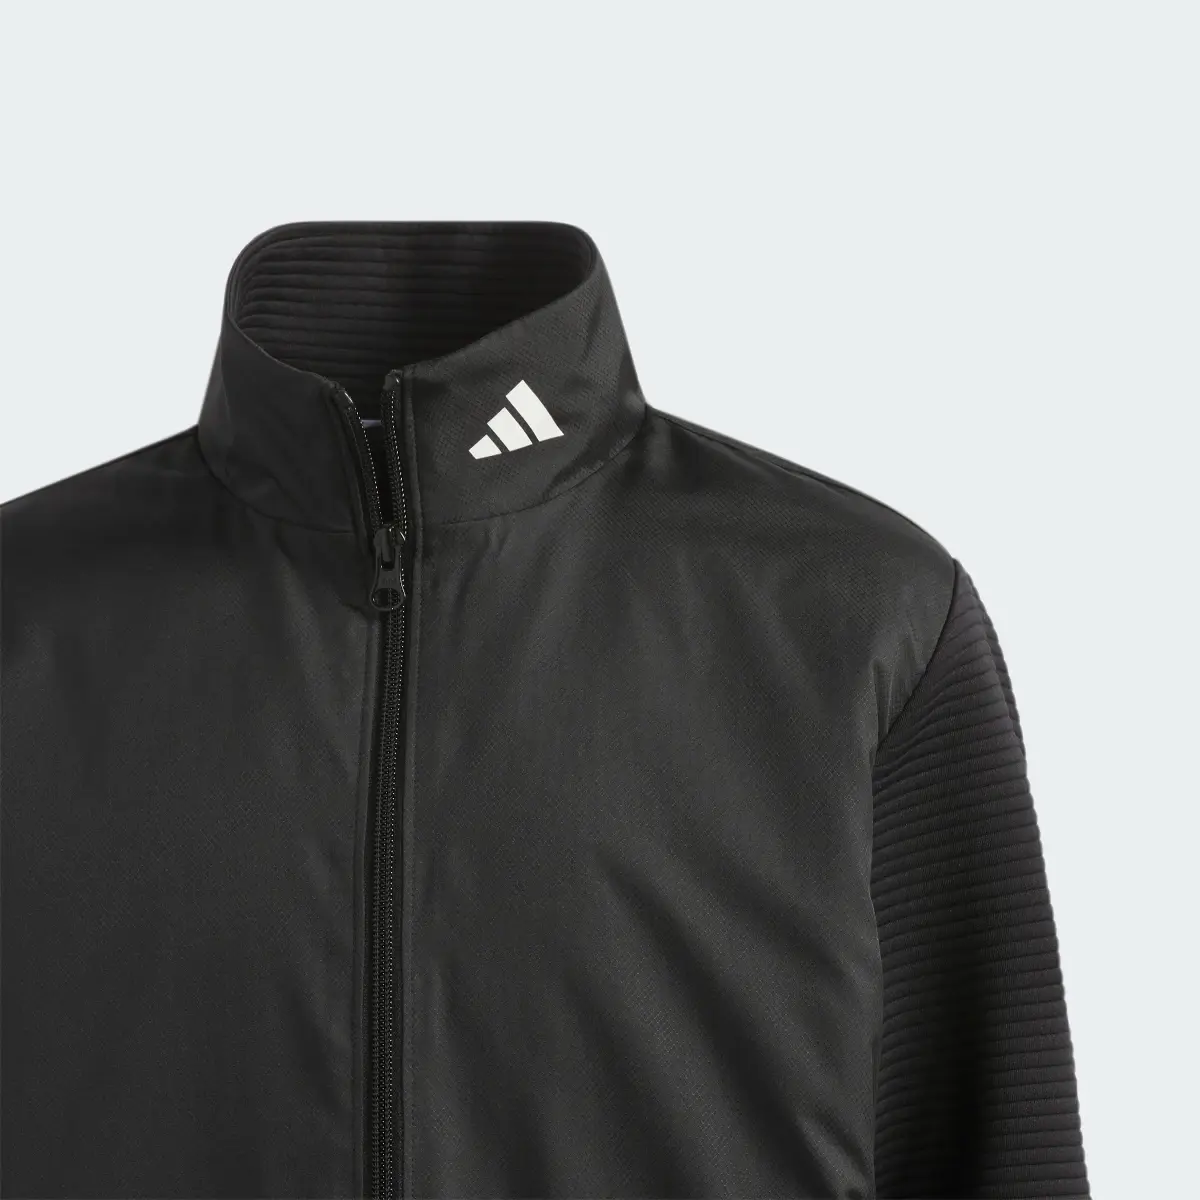 Adidas Winter Golf Jacket. 3